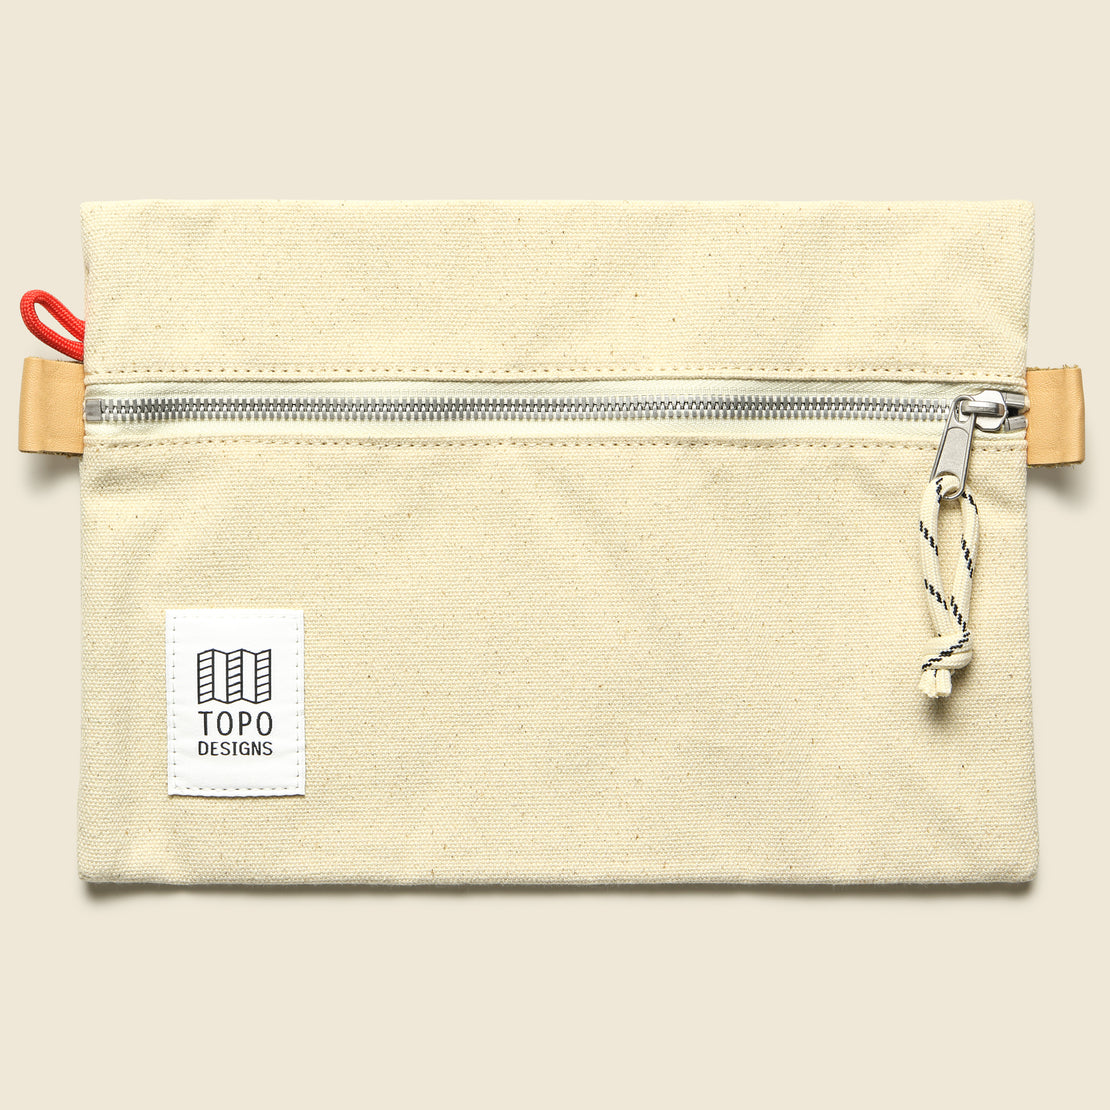 Topo Designs Medium Accessory Bag - Natural Canvas